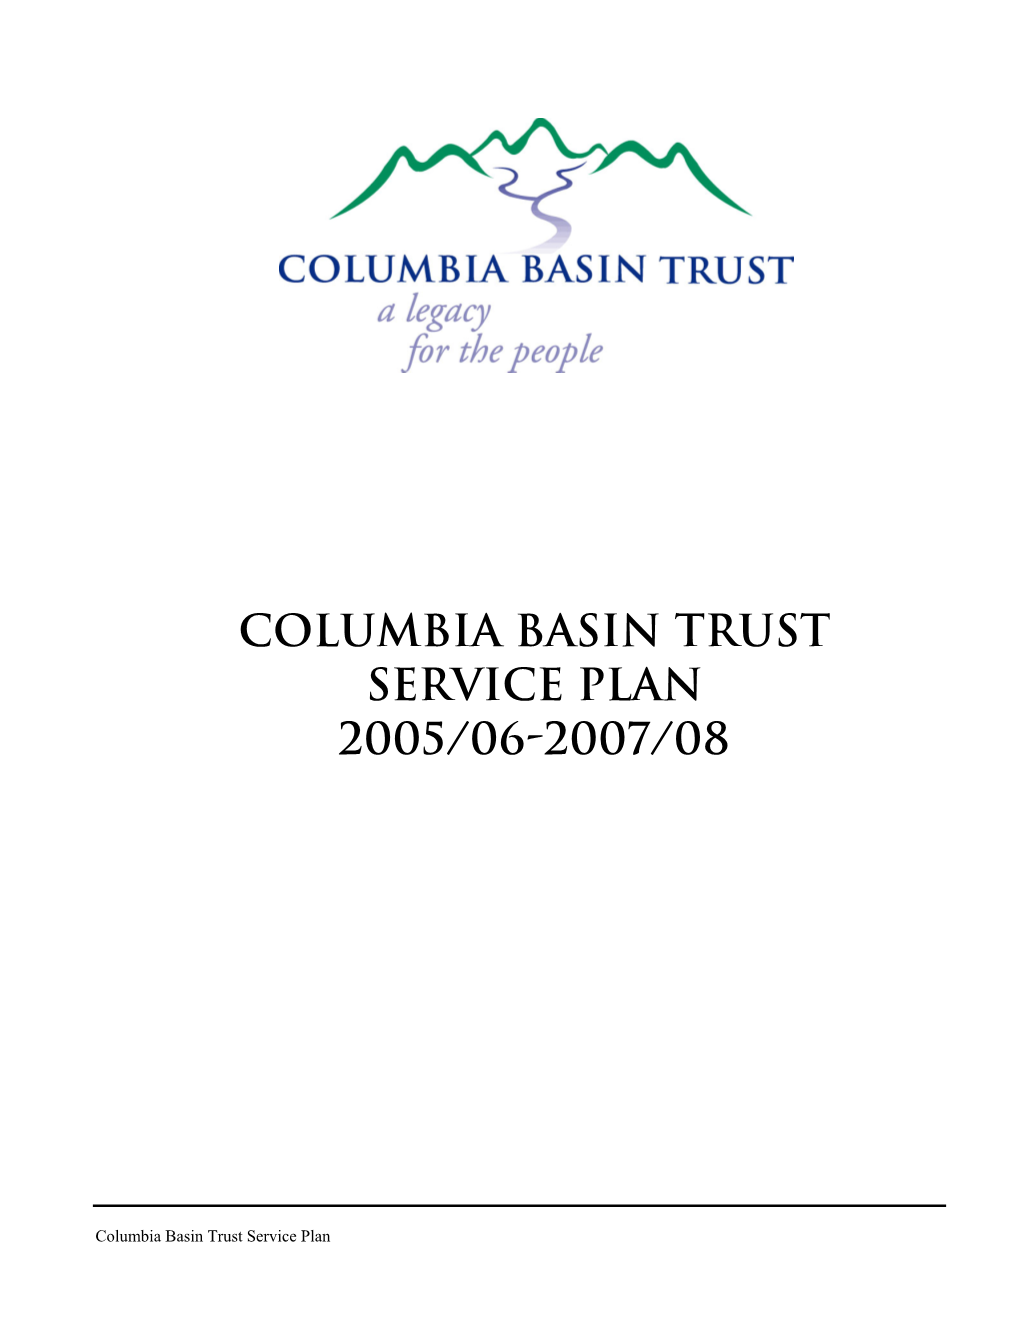 Columbia Basin Trust Service Plan 2005/06-2007/08